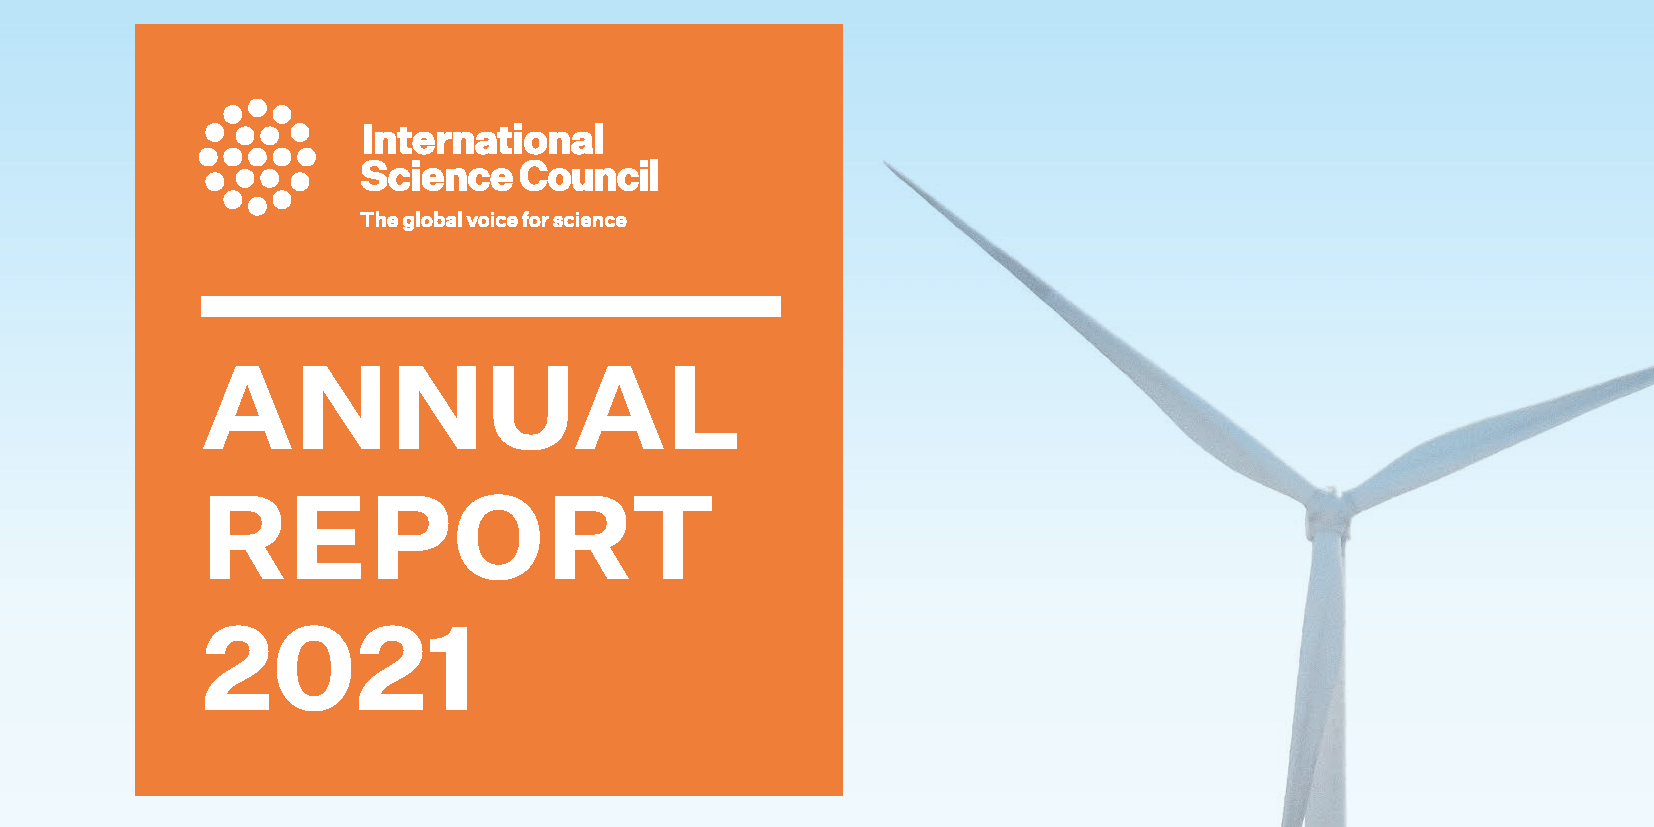 Annual Report 2021-22